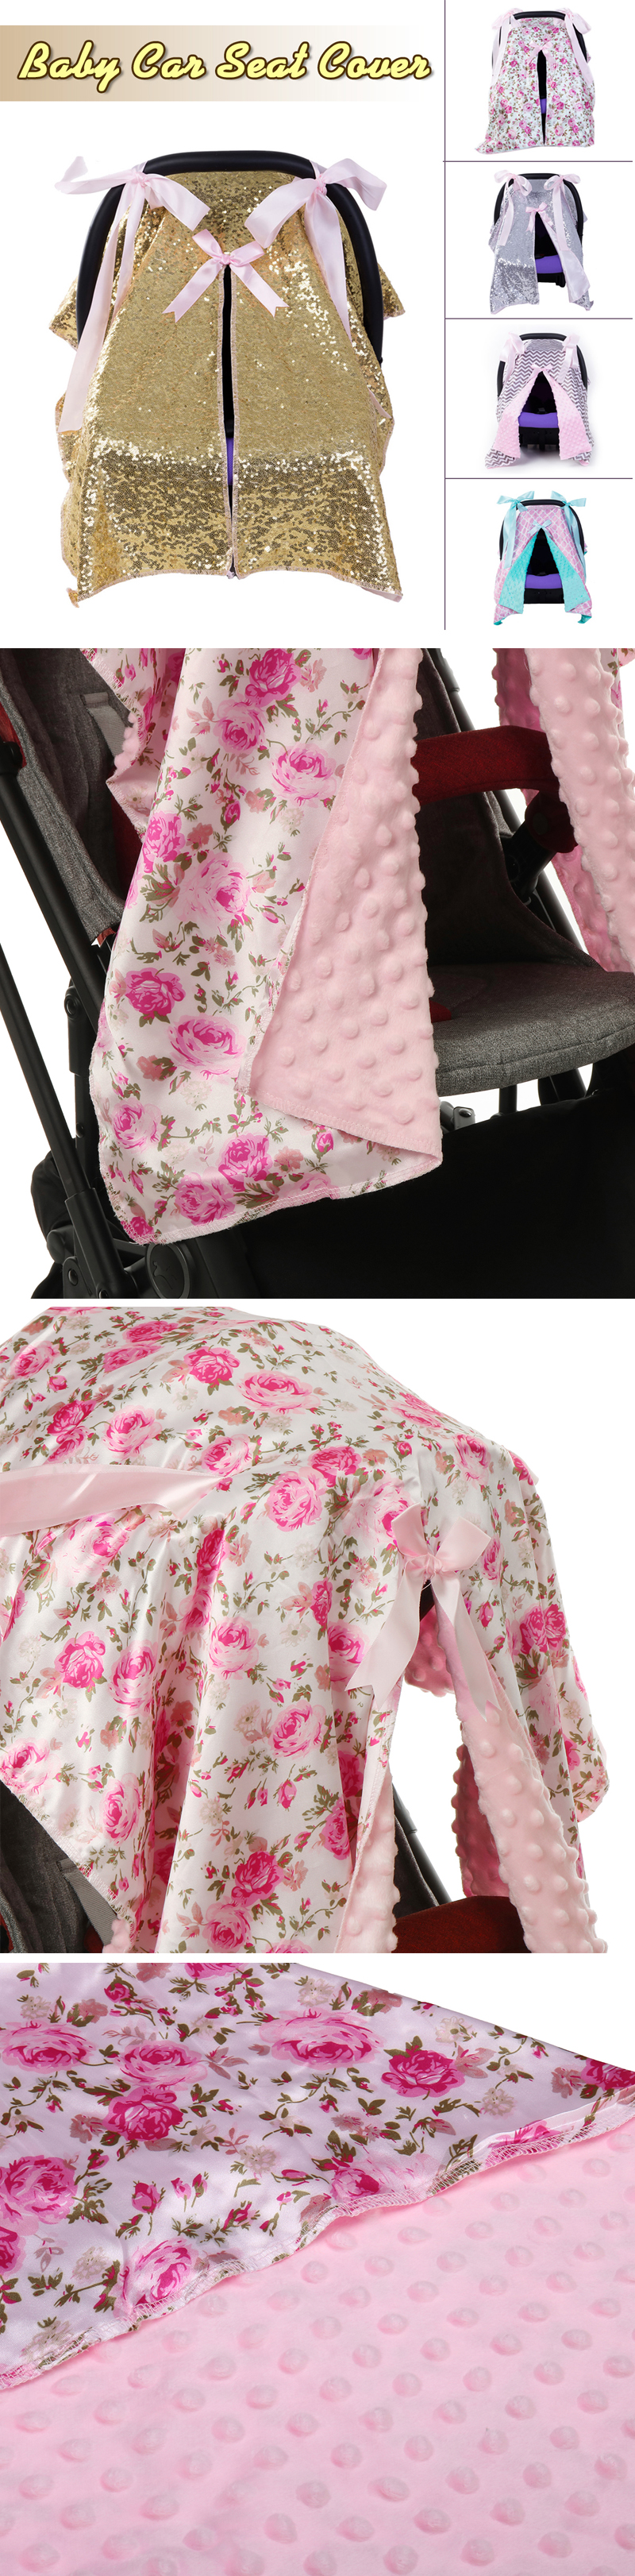 Baby-Stroller-Sunshade-Breathable-Muslin-Pram-Car-Seat-Canopy-Blanket-Outdoor-Travel-1469133-1